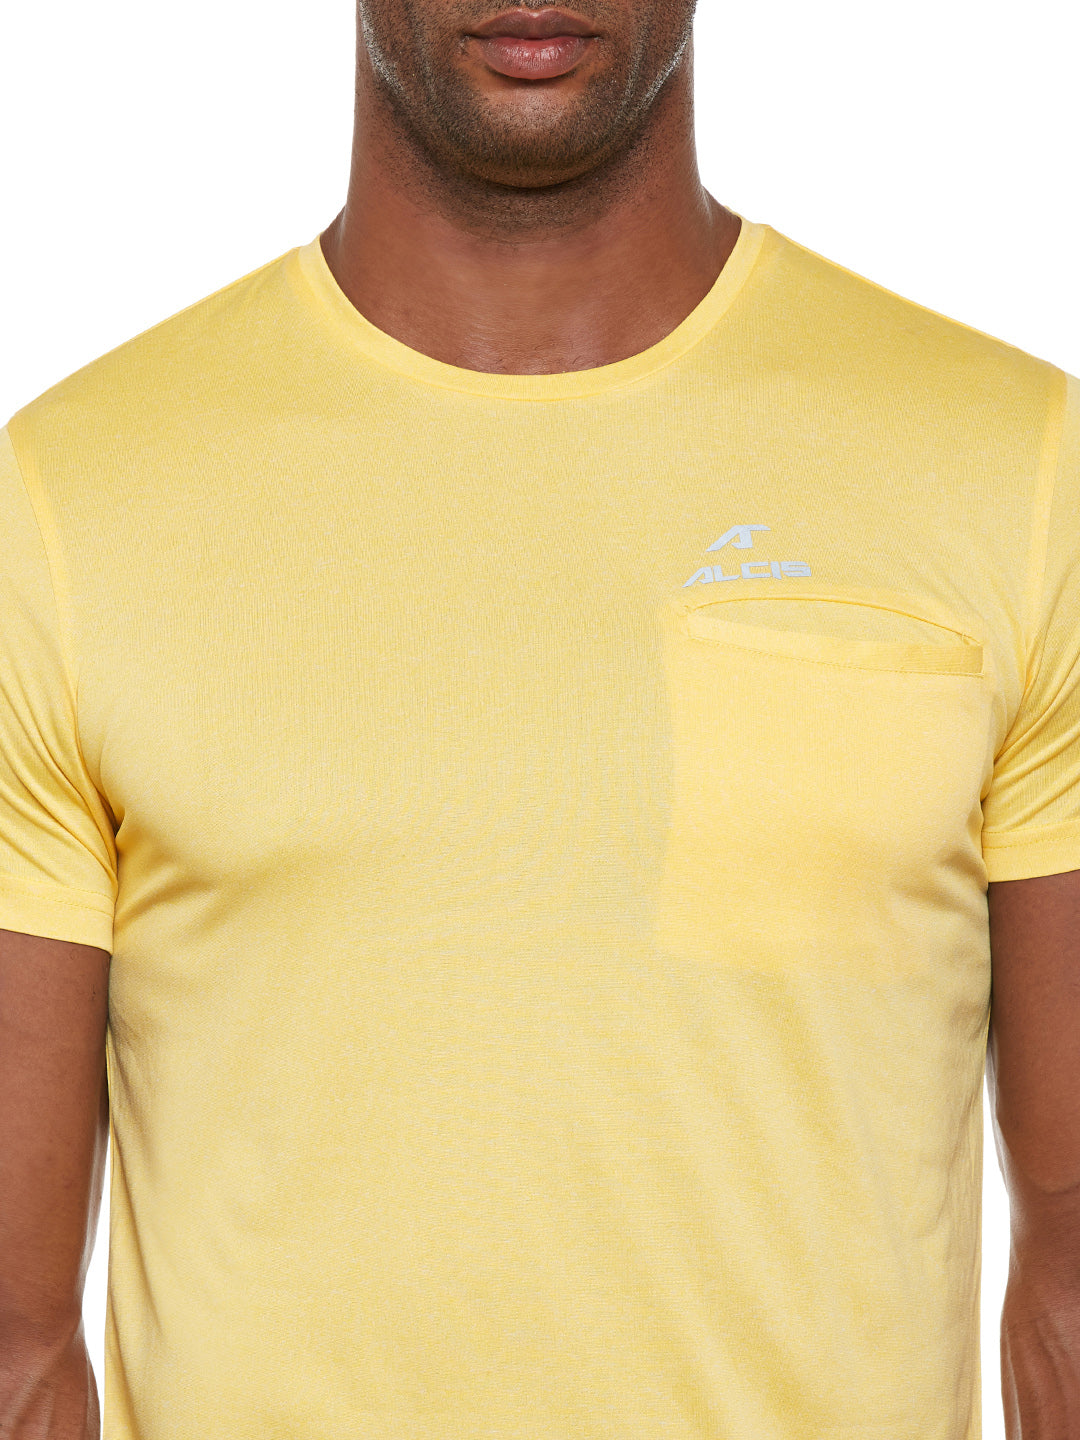 ALCIS Men Solid Yellow Tee T-Shirt